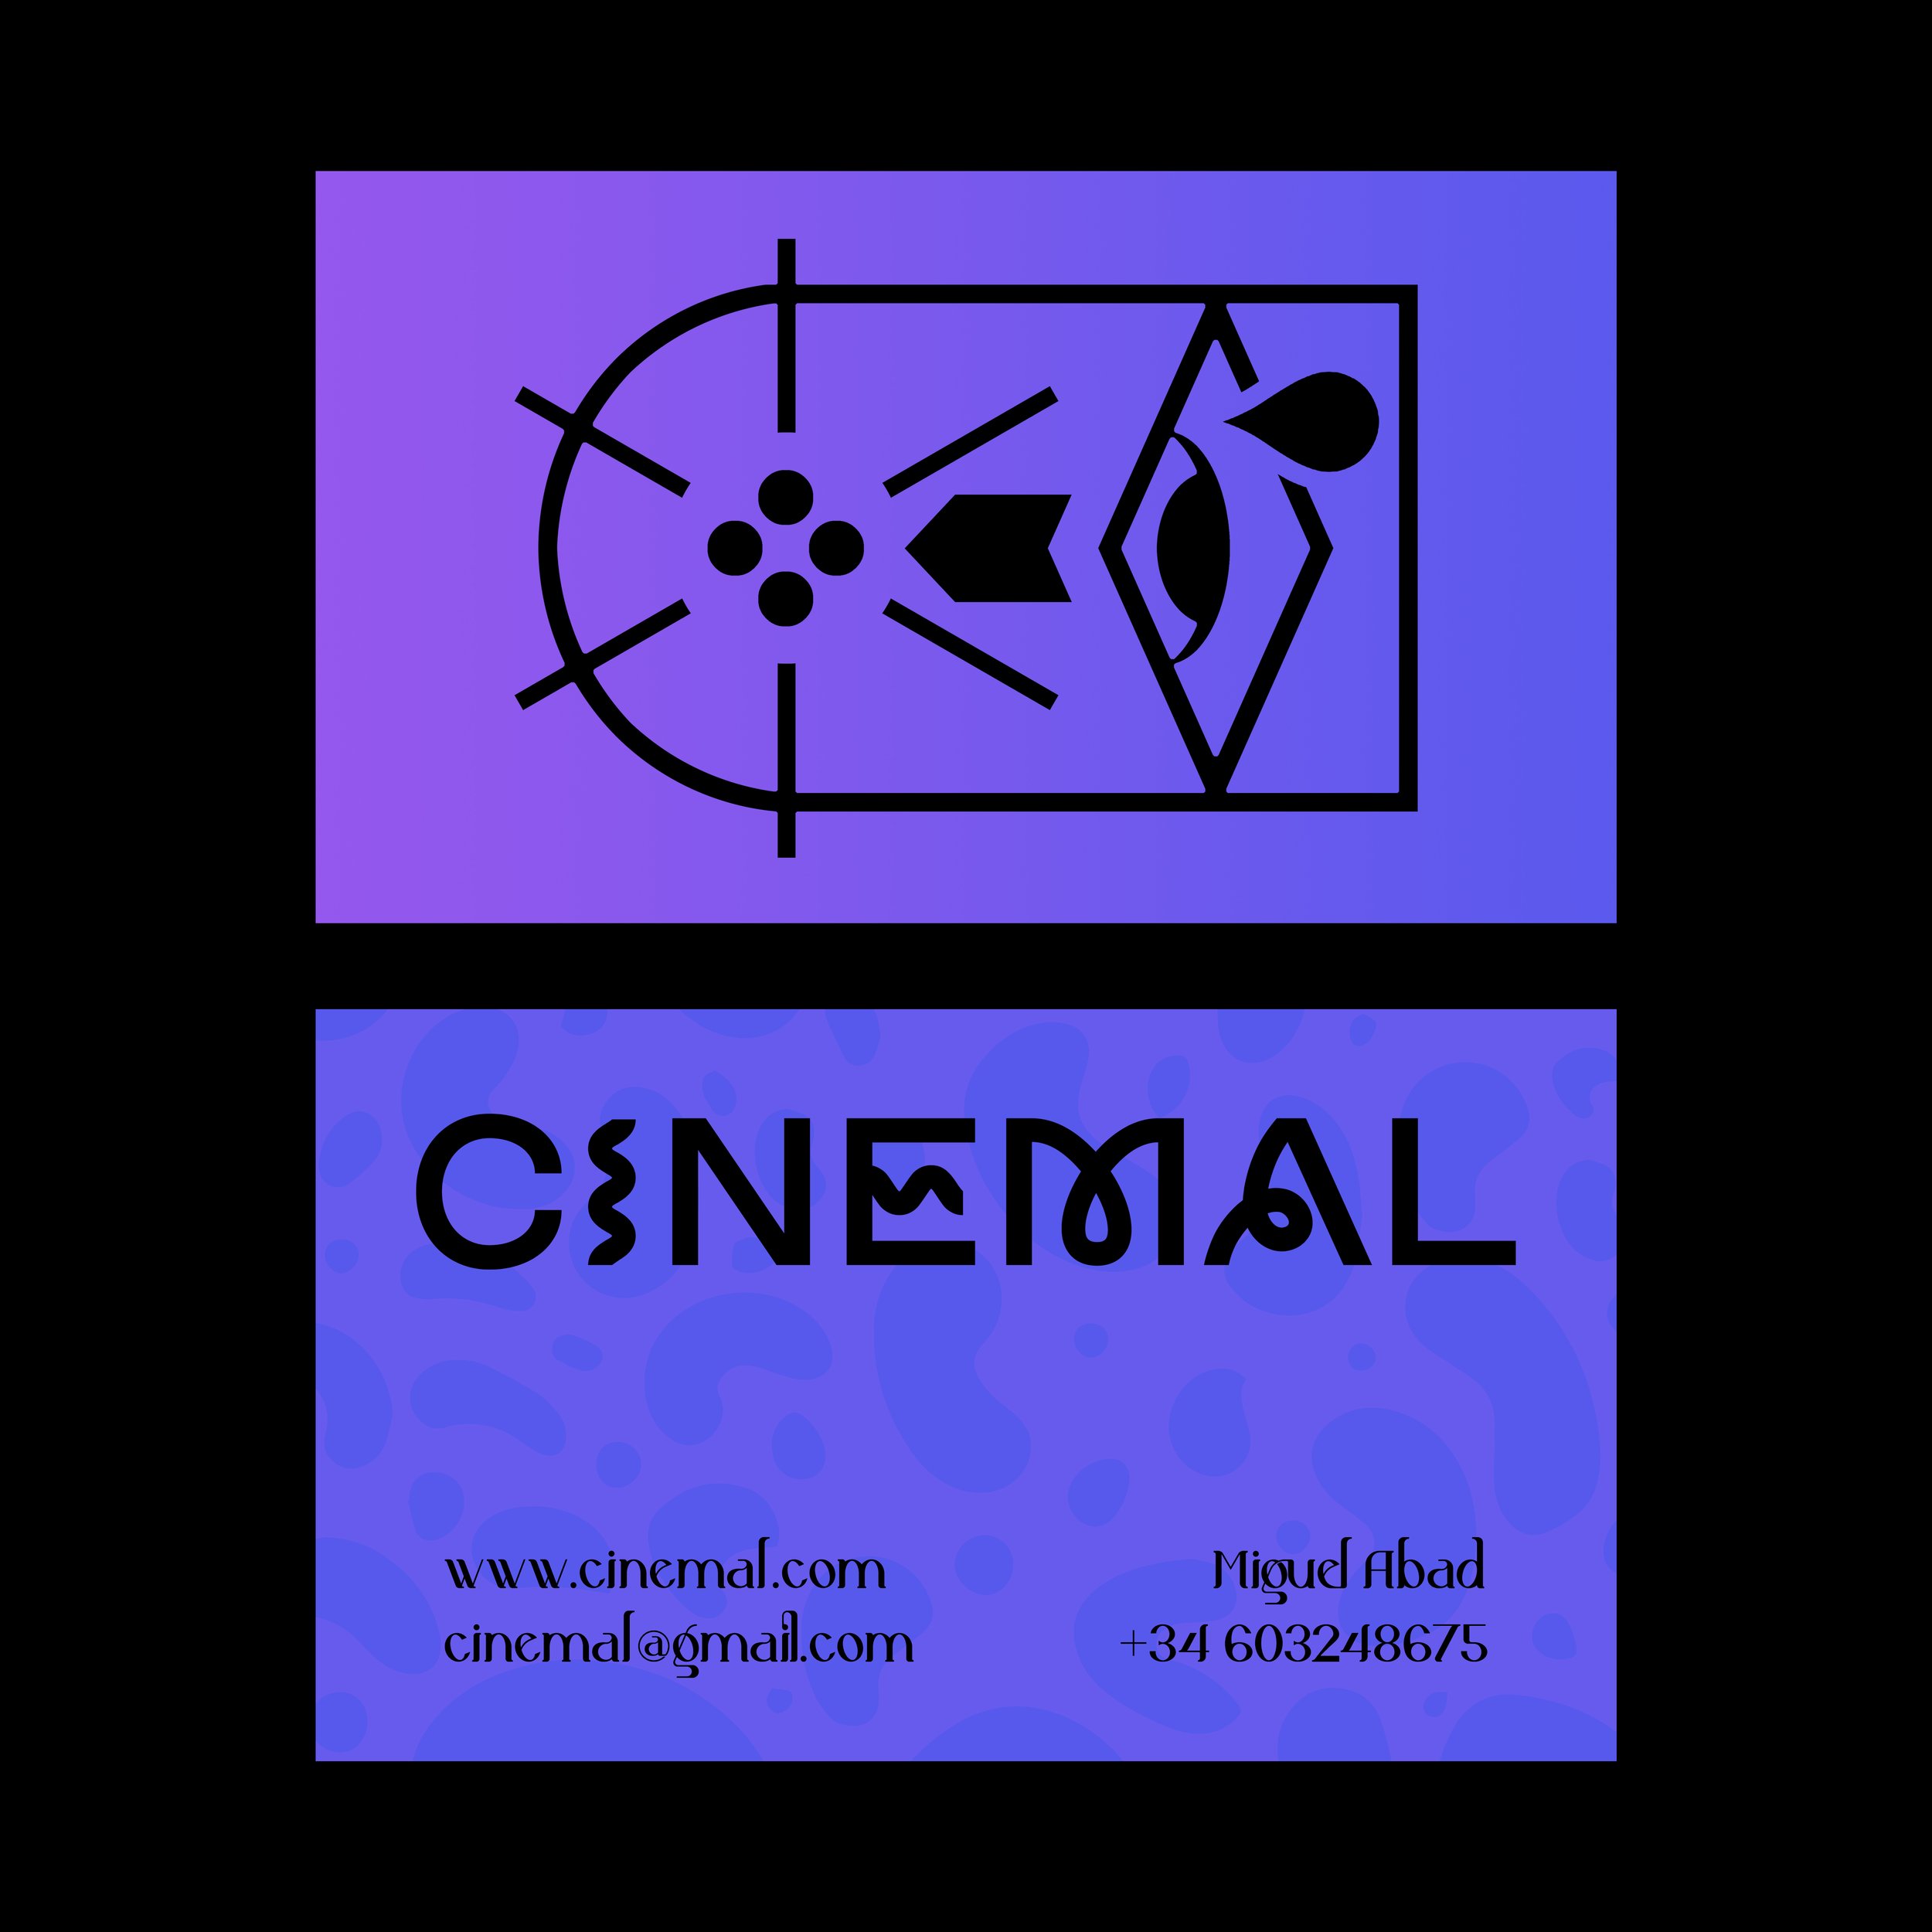 CINEMAL BUSINESS CARDS 3.jpg